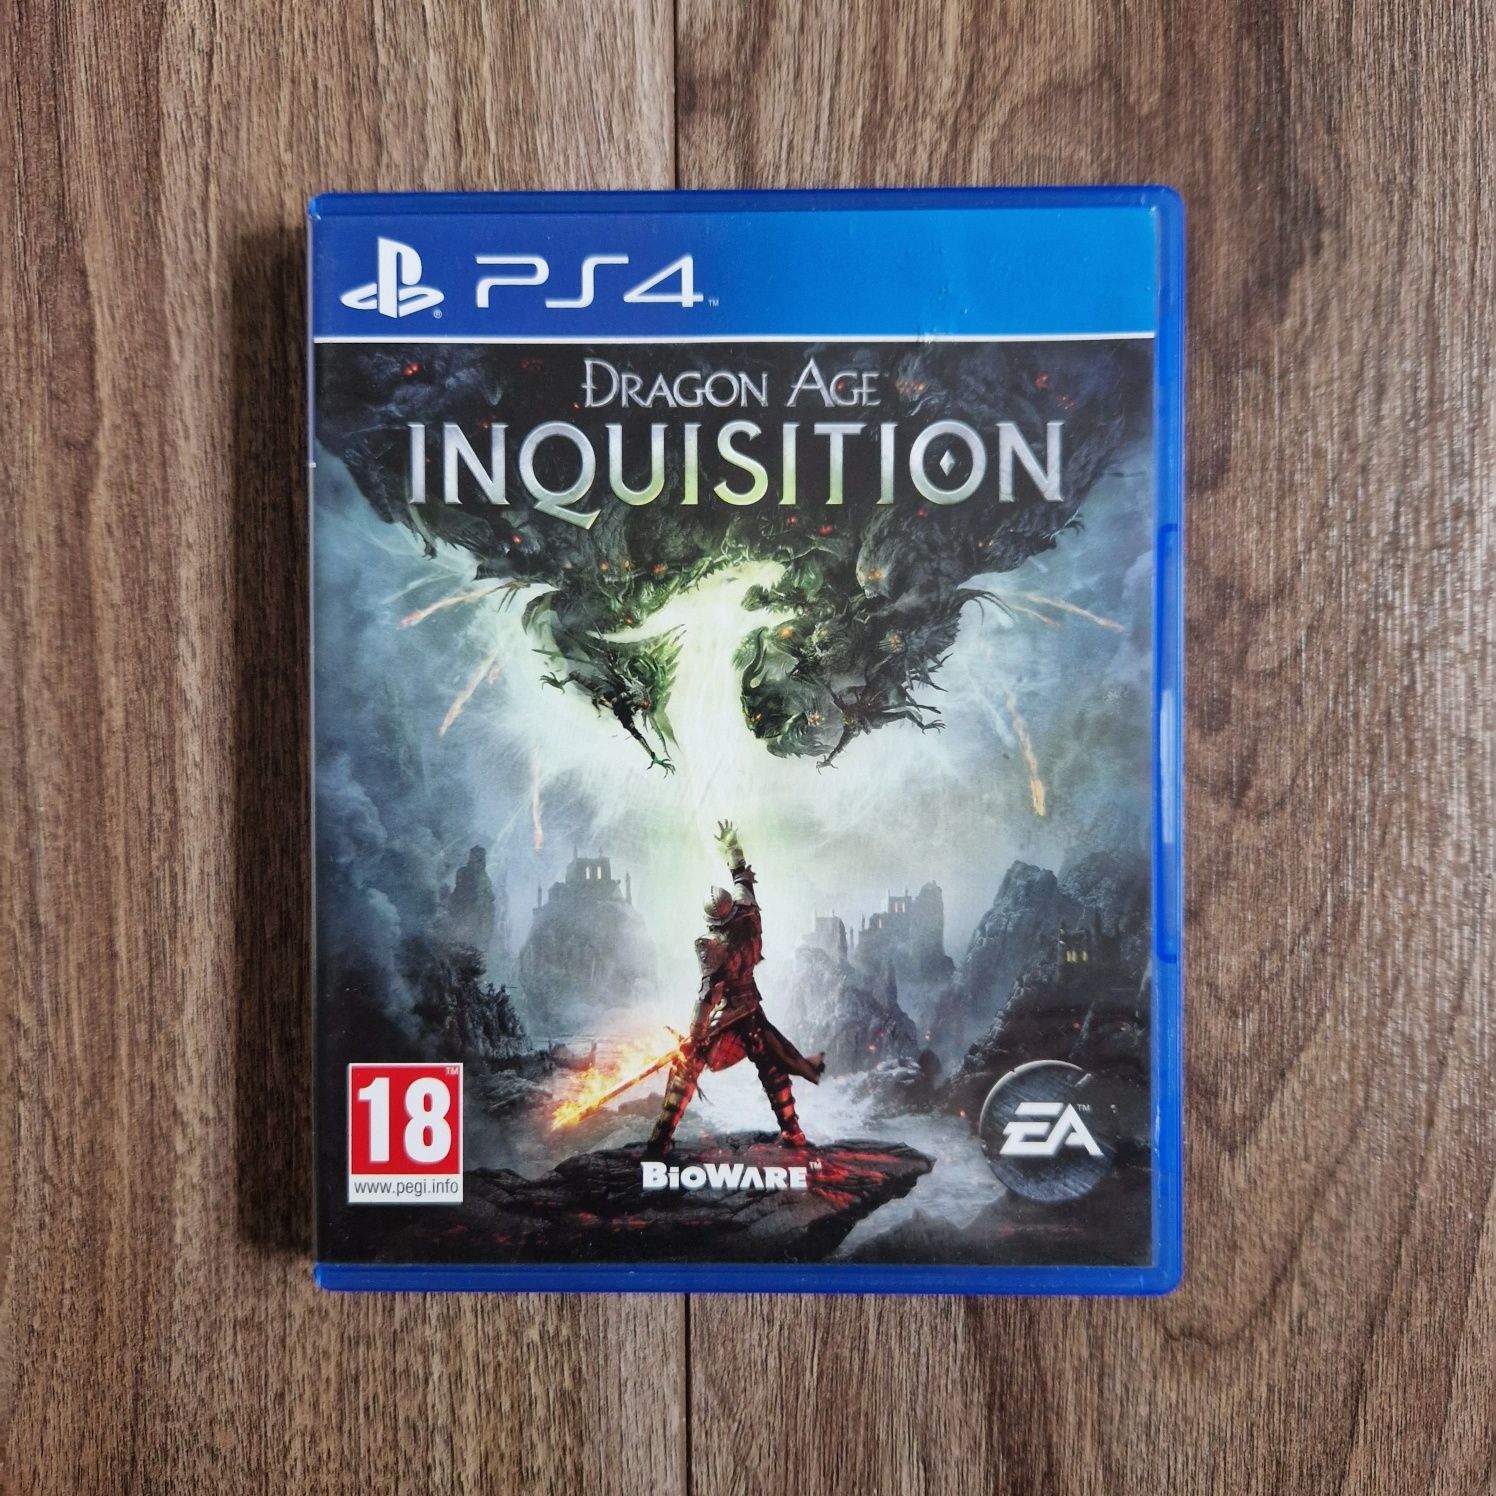 Dragon Age Inquisition - Ps4